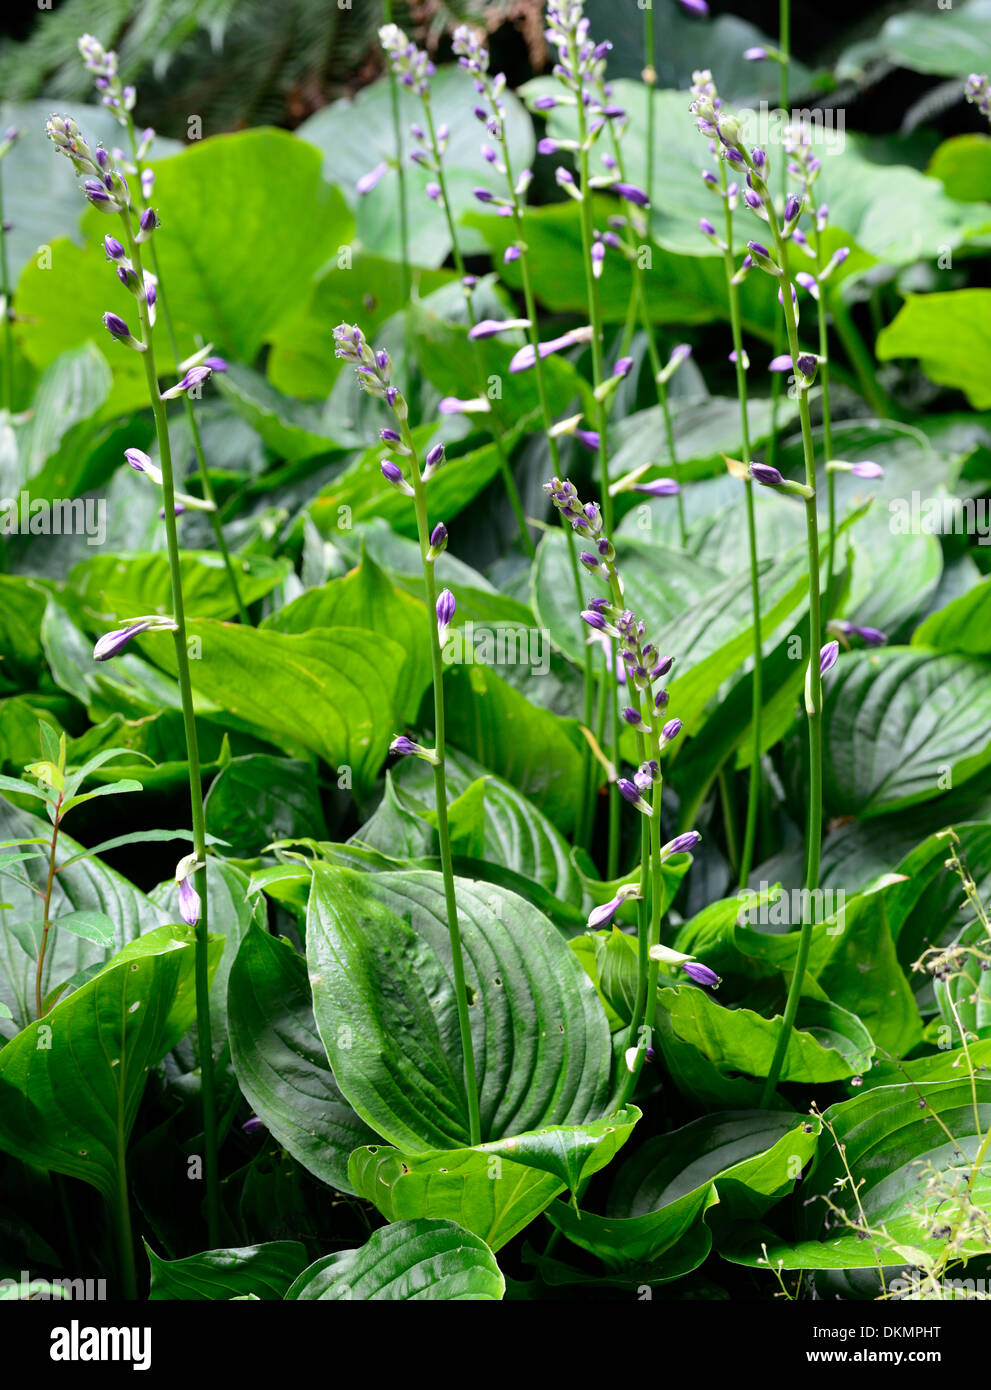 Hosta Ventricosa plantain lily lilies green foliage herbaceous perennial Stock Photo